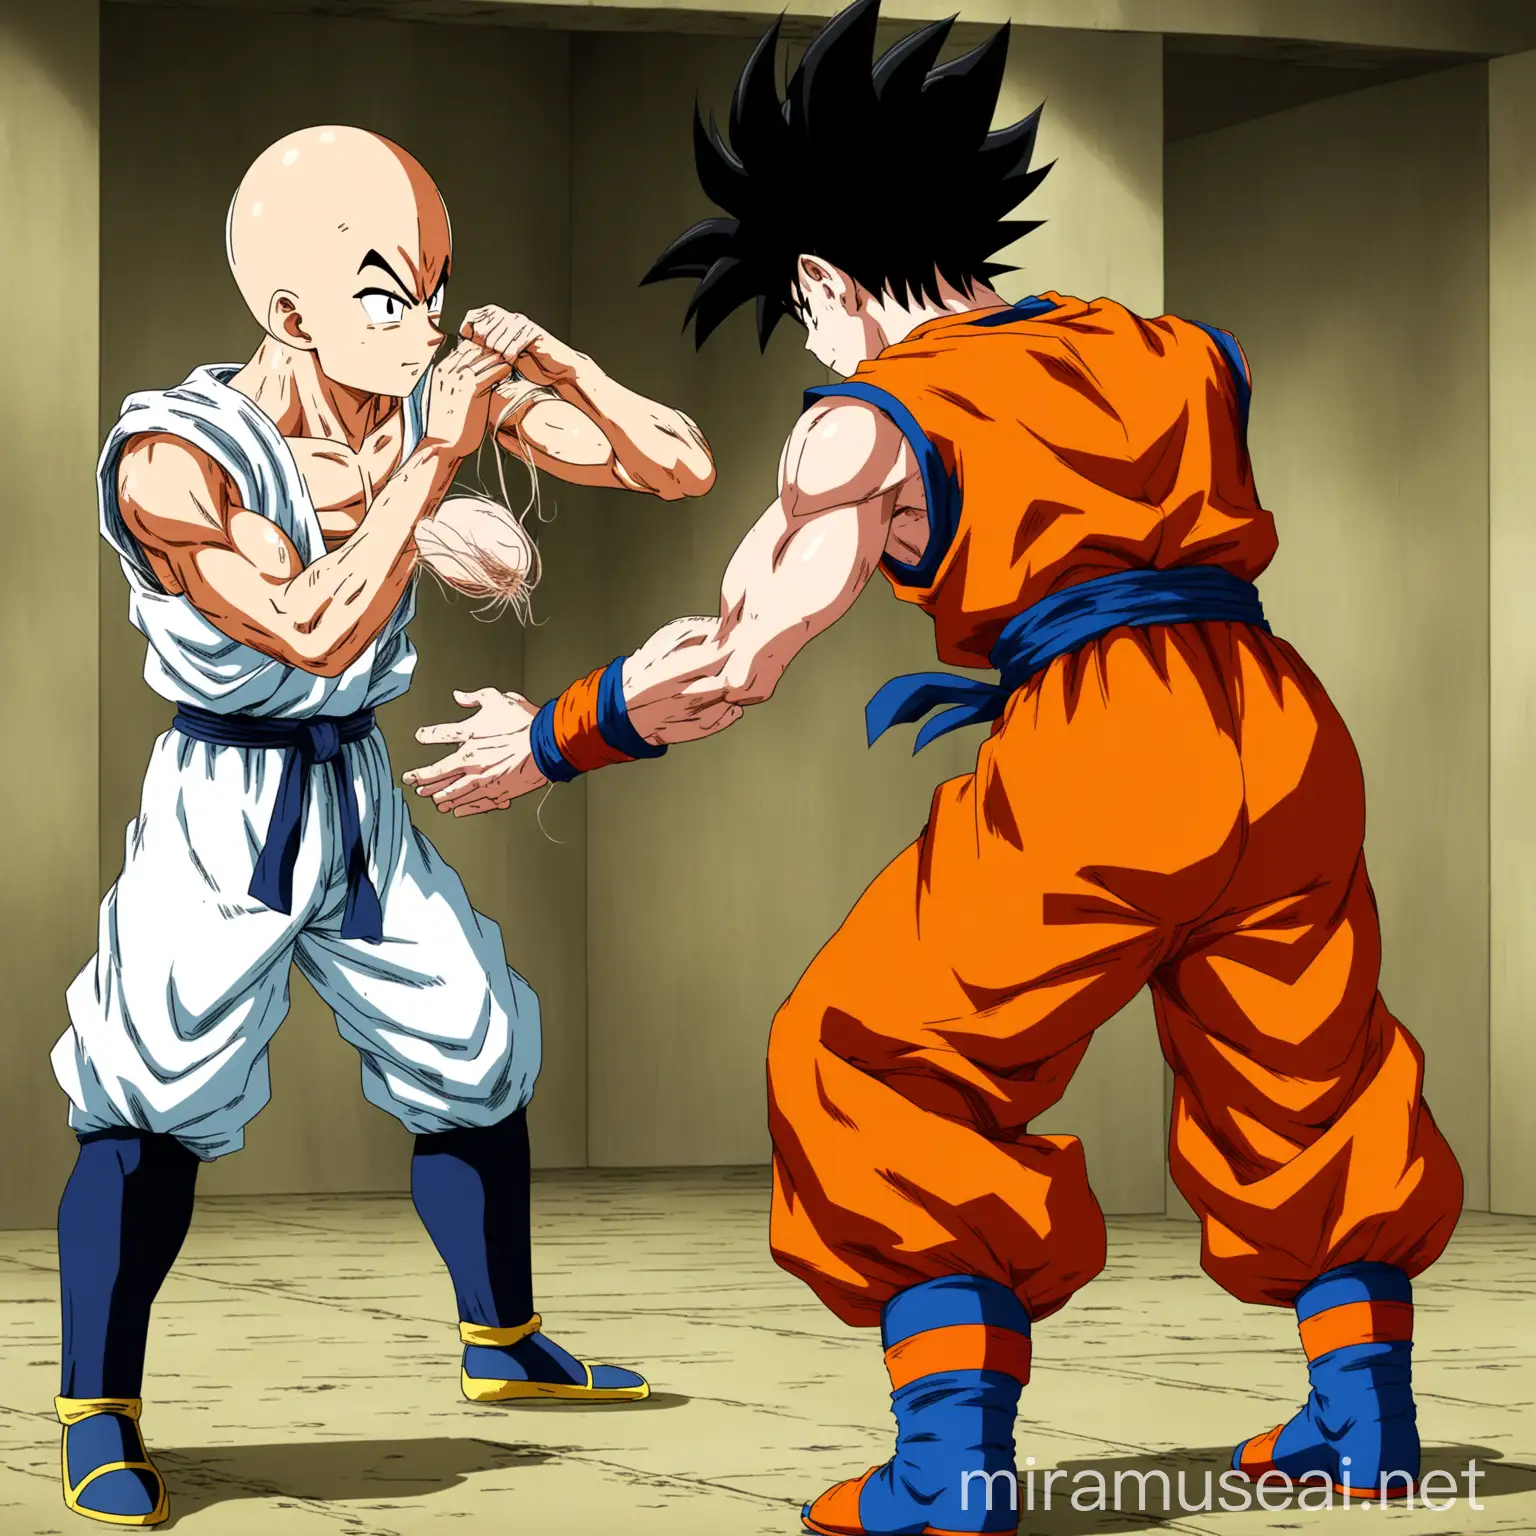 Goku handing over some hairs to Saitama in a dragon ball super setup. 